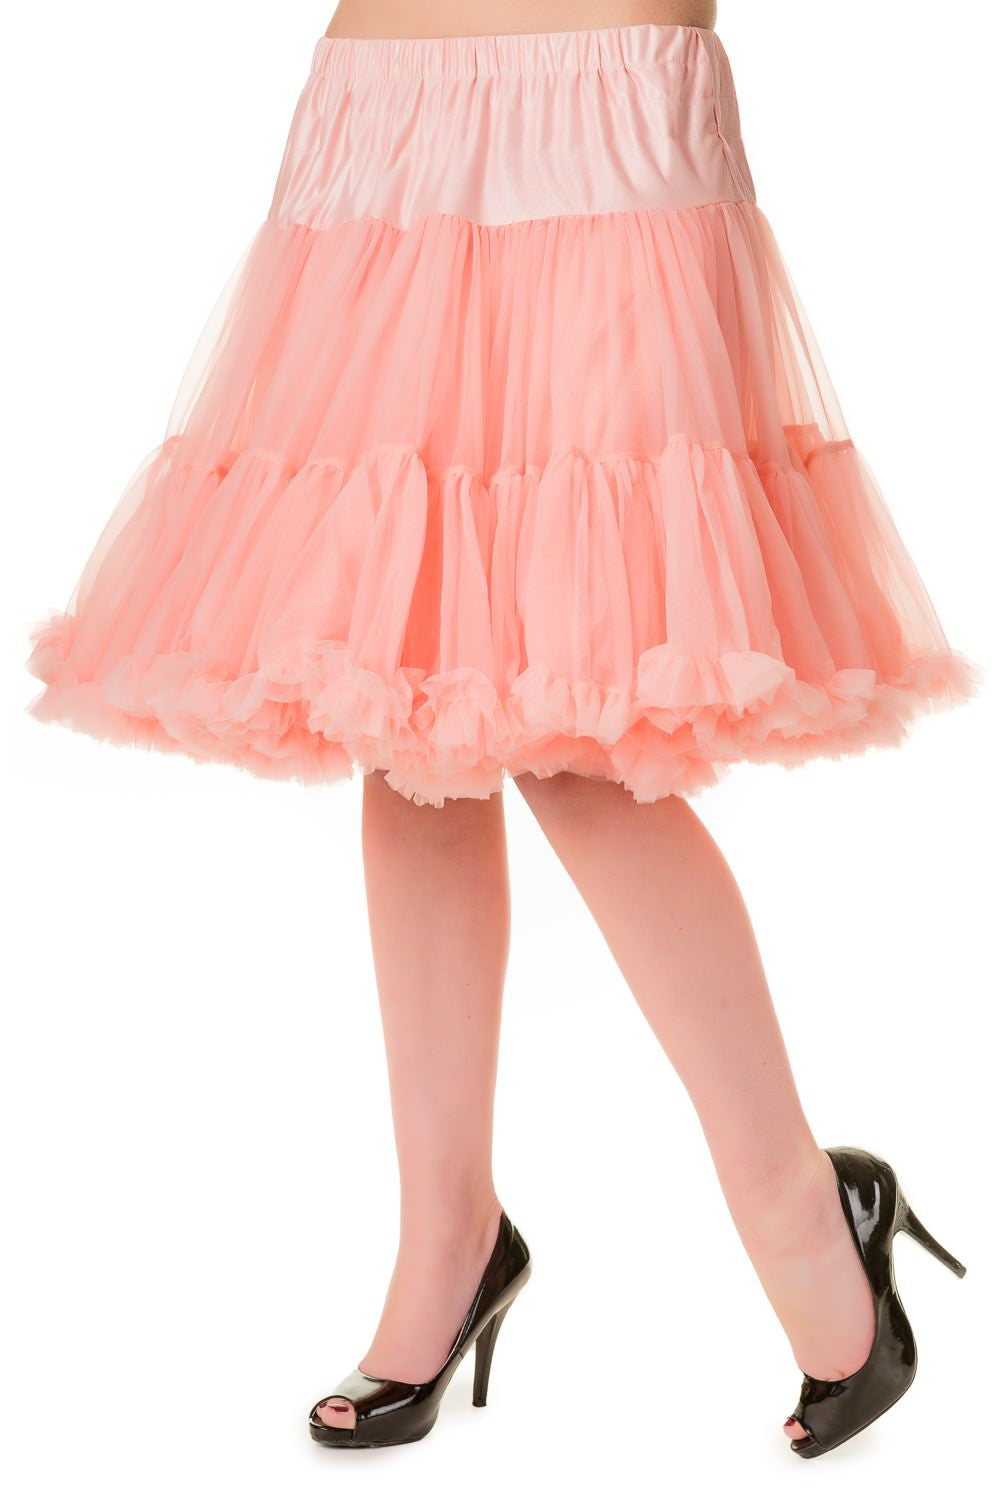 Walkabout Petticoat in Pink - Natasha Marie Clothing